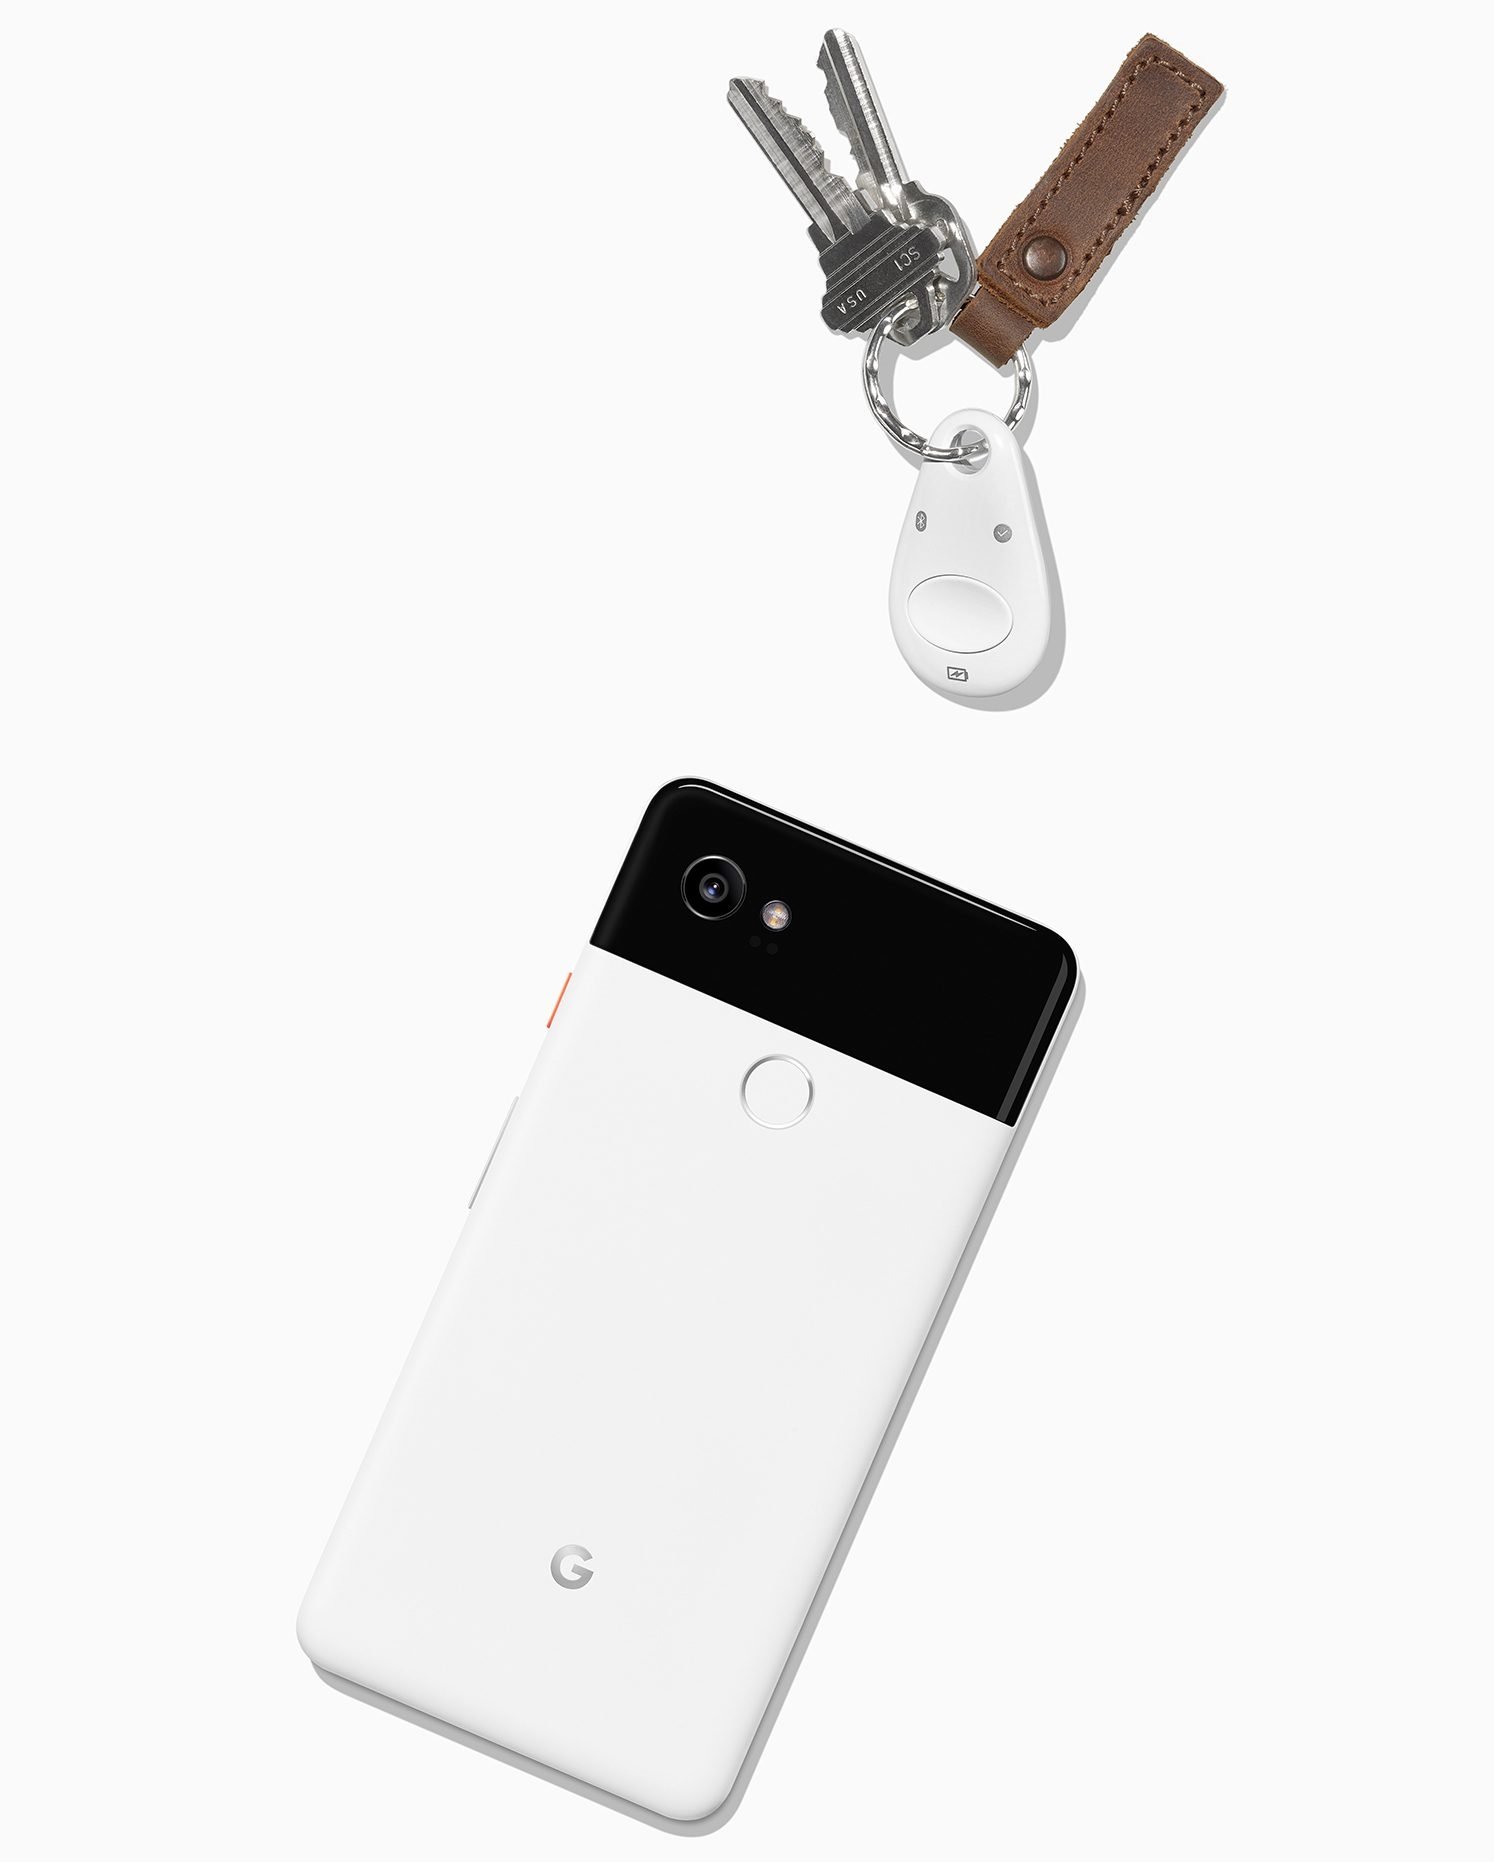 Google Titan Security Key